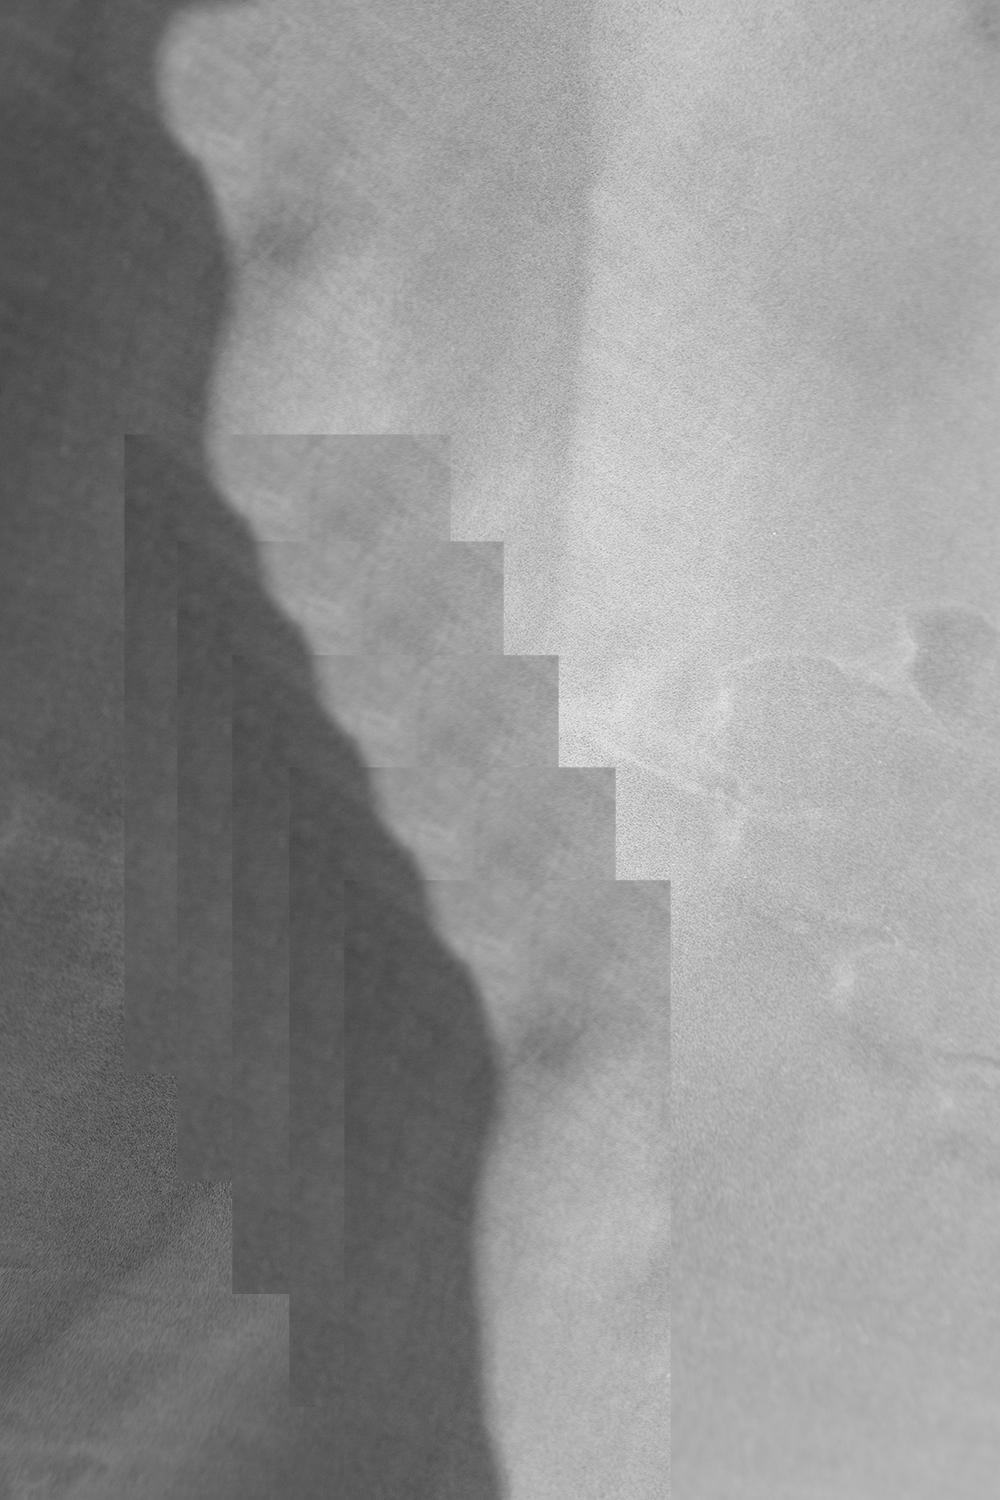 carina martins, eikasia - grey geometric photography with rectangles-2